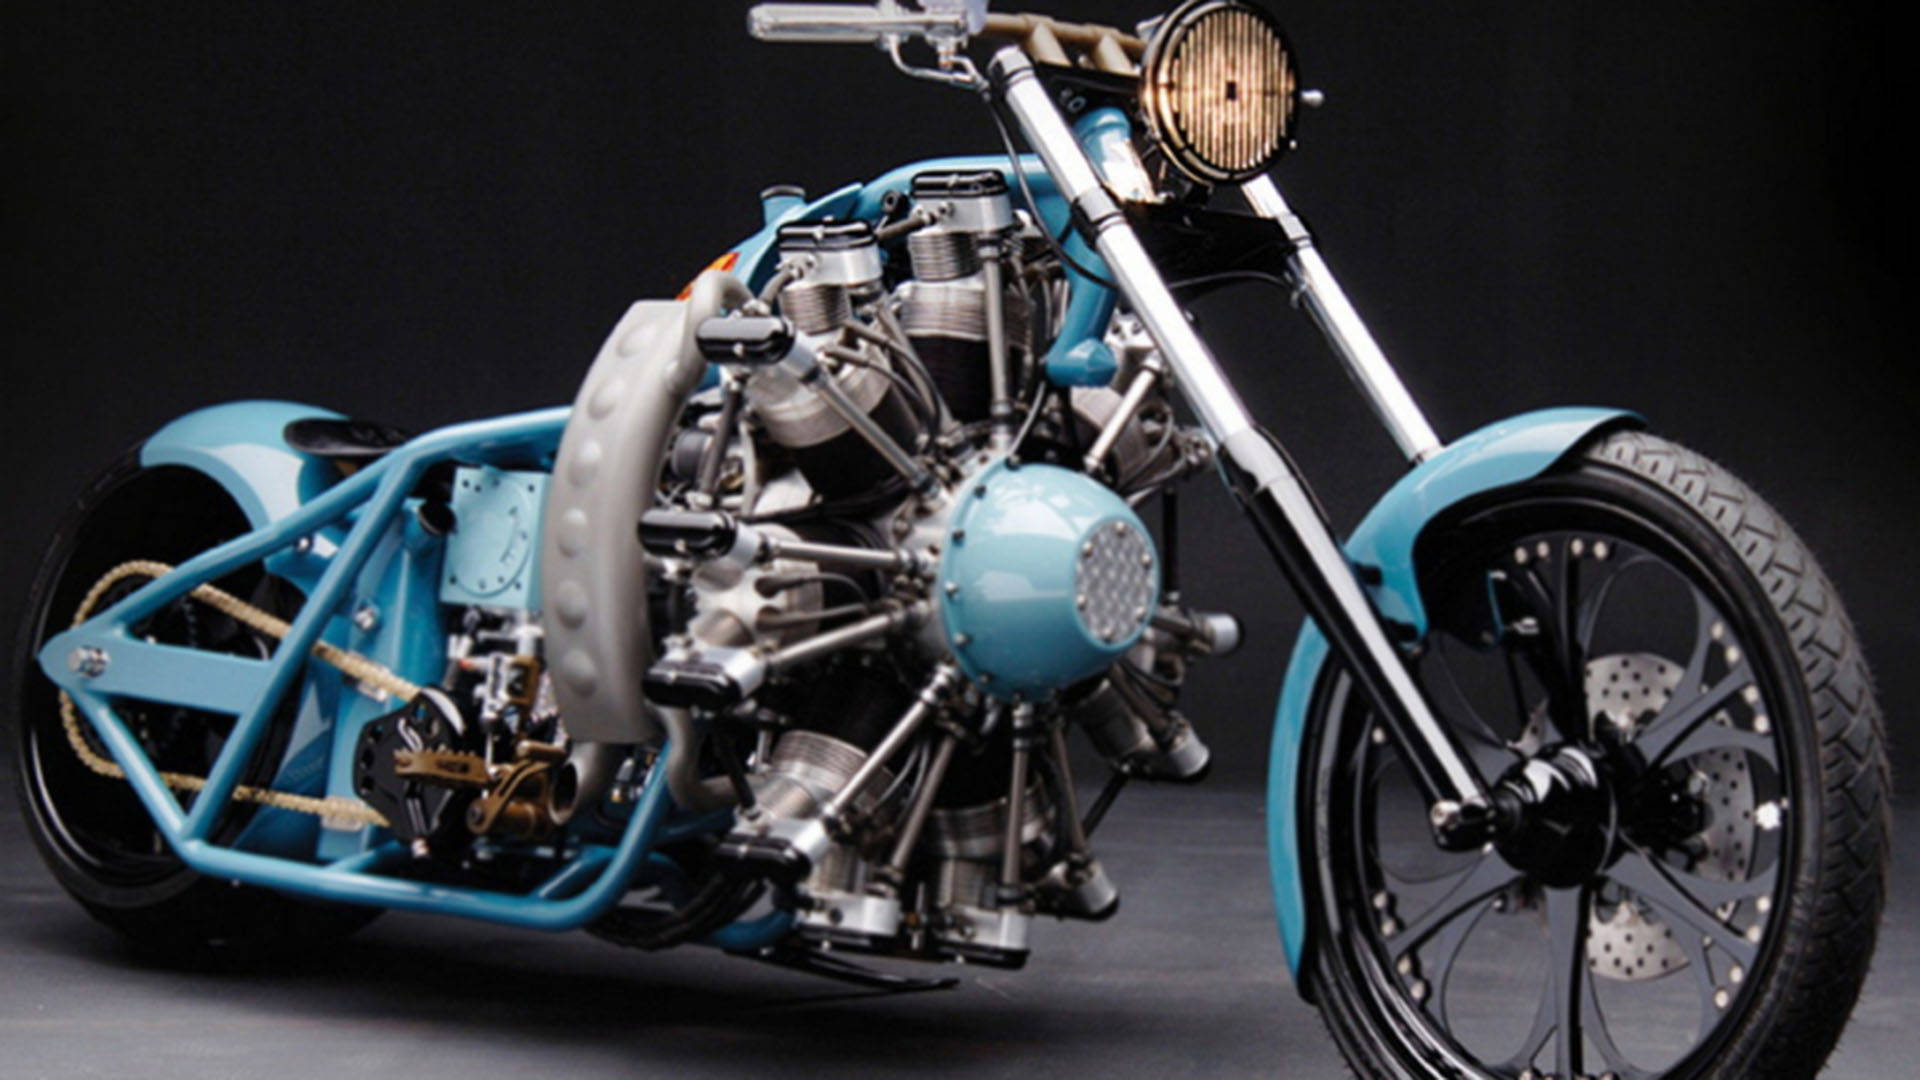 West Coast Choppers Motorcycle Engine Background